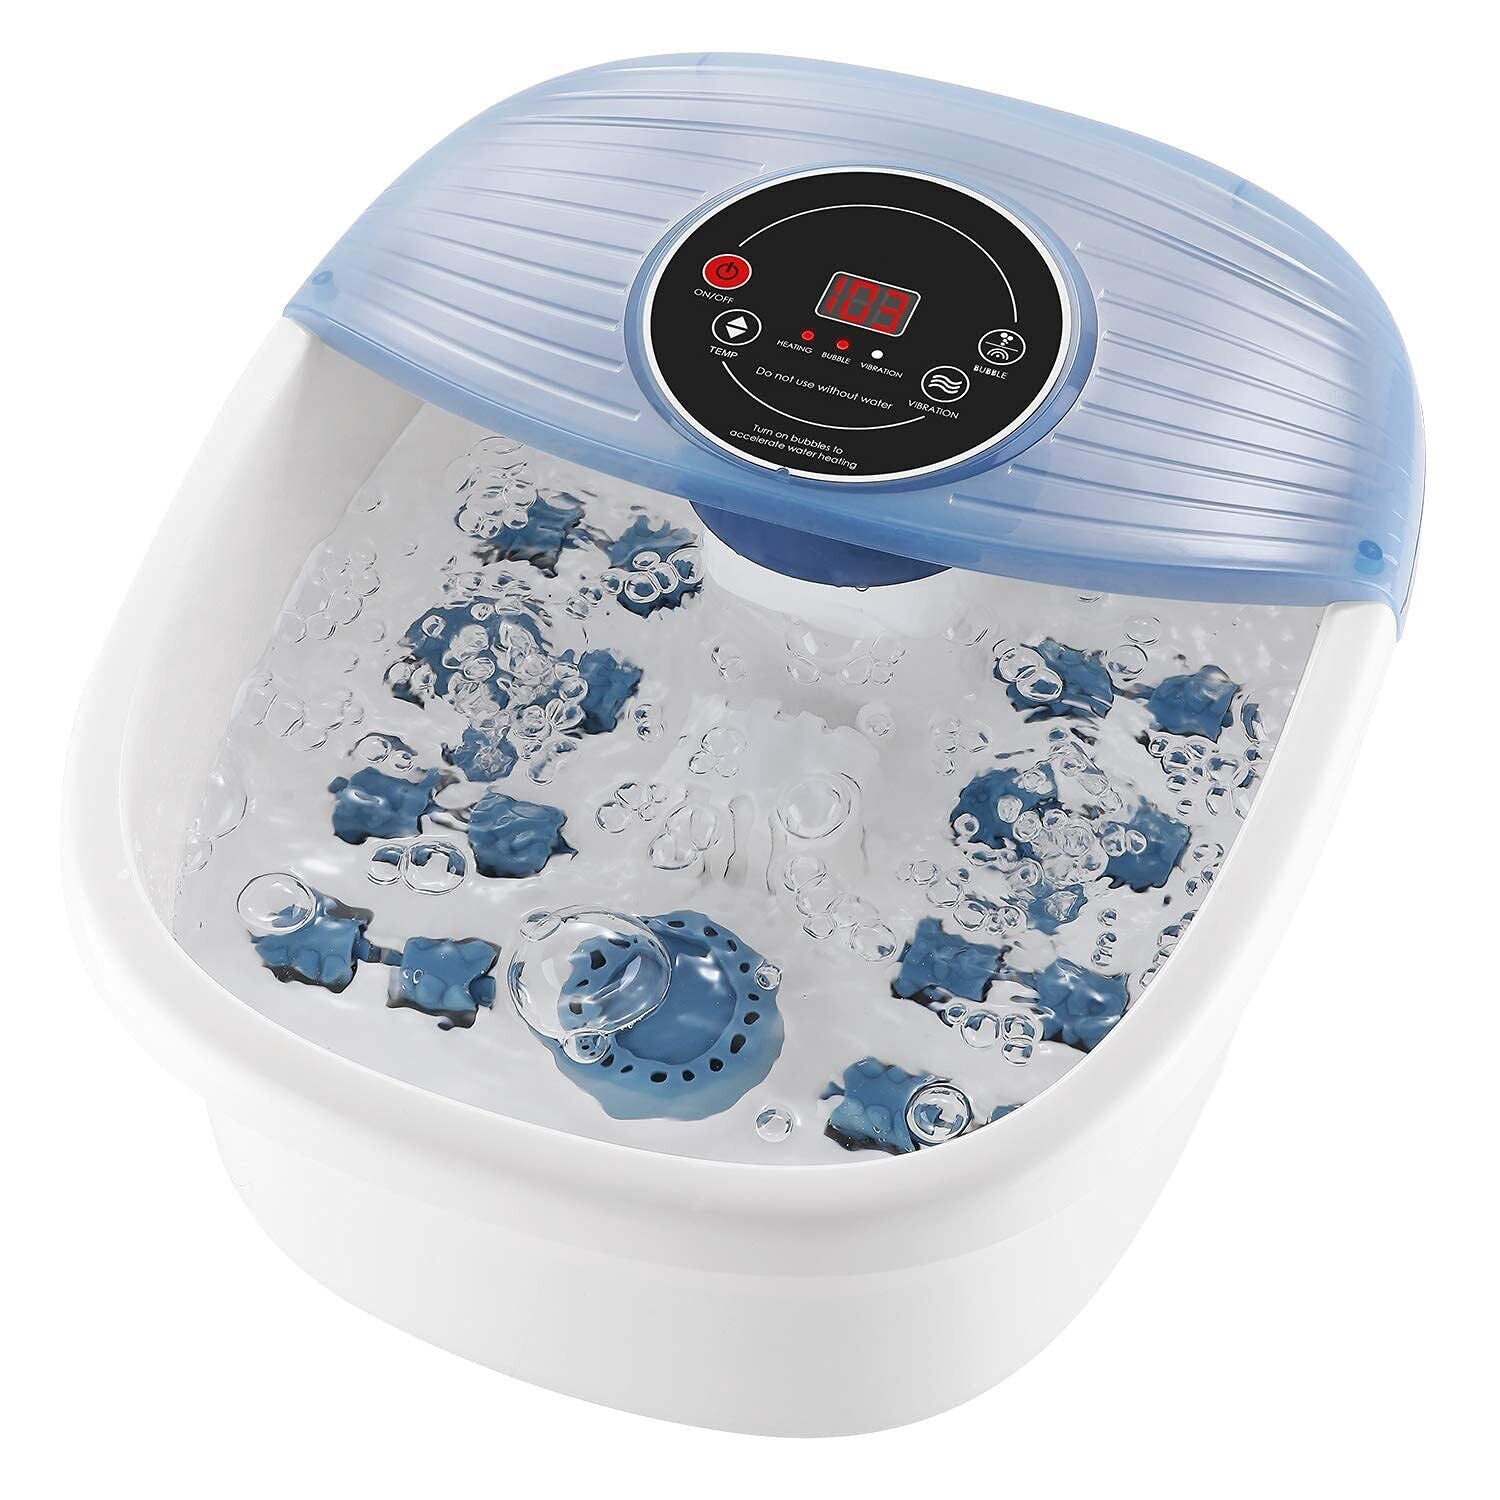 Temperature Controlled Foot Bubble Bath Vibration Massager